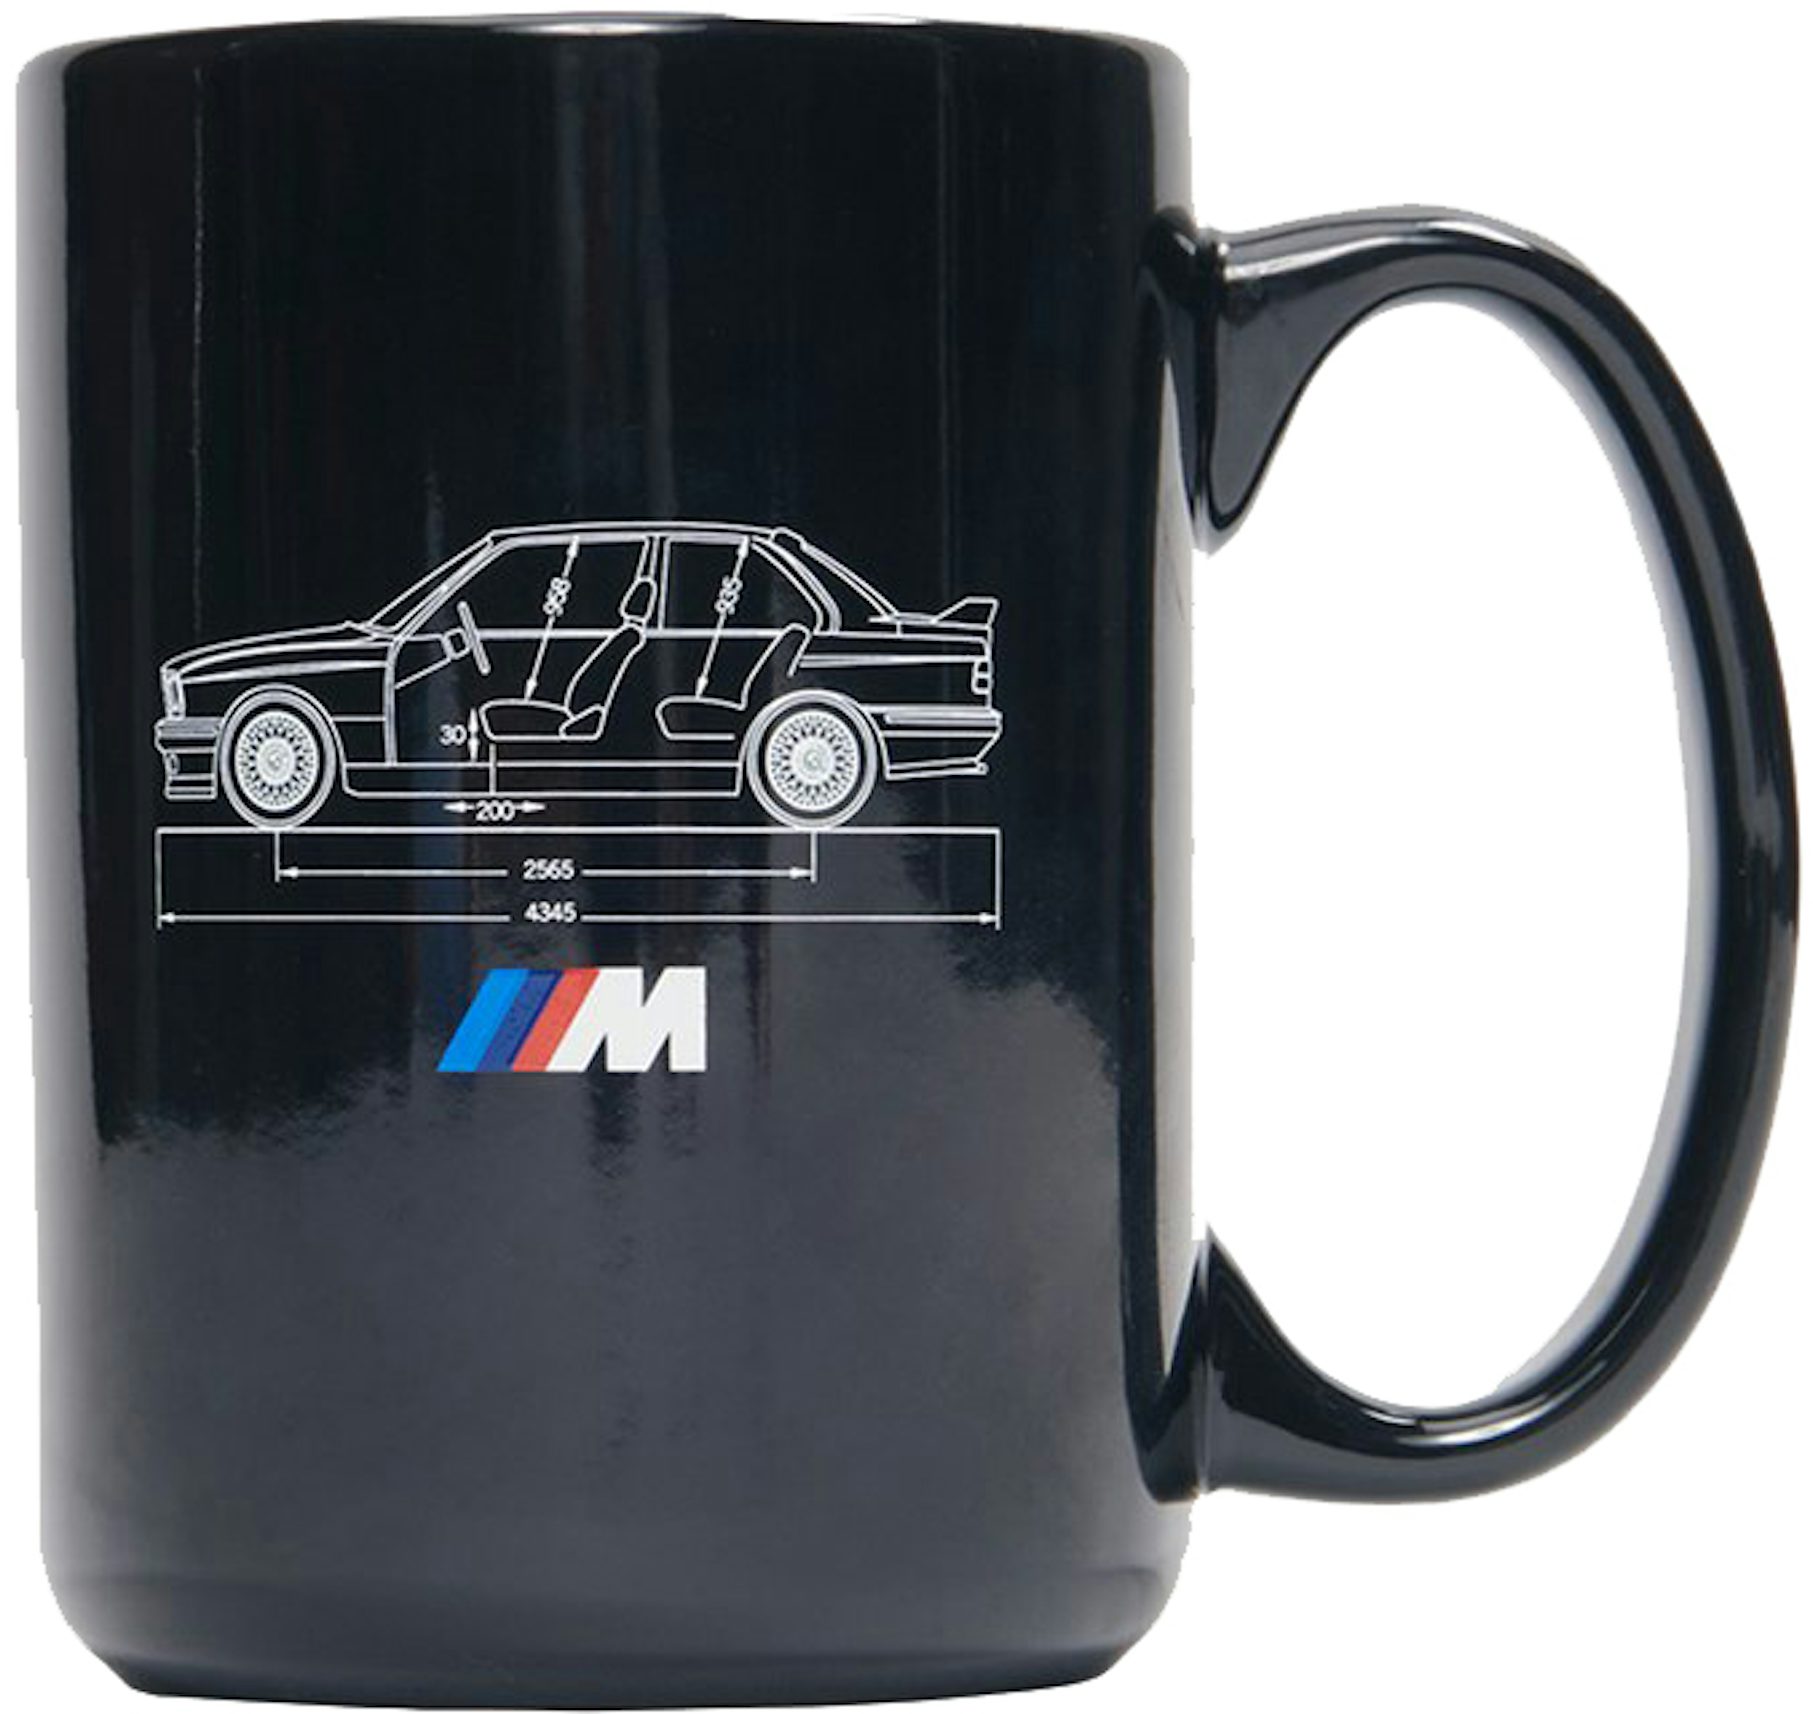 https://images.stockx.com/images/Kith-x-BMW-Sketch-Mug-Black.jpg?fit=fill&bg=FFFFFF&w=1200&h=857&fm=jpg&auto=compress&dpr=2&trim=color&updated_at=1637600296&q=60